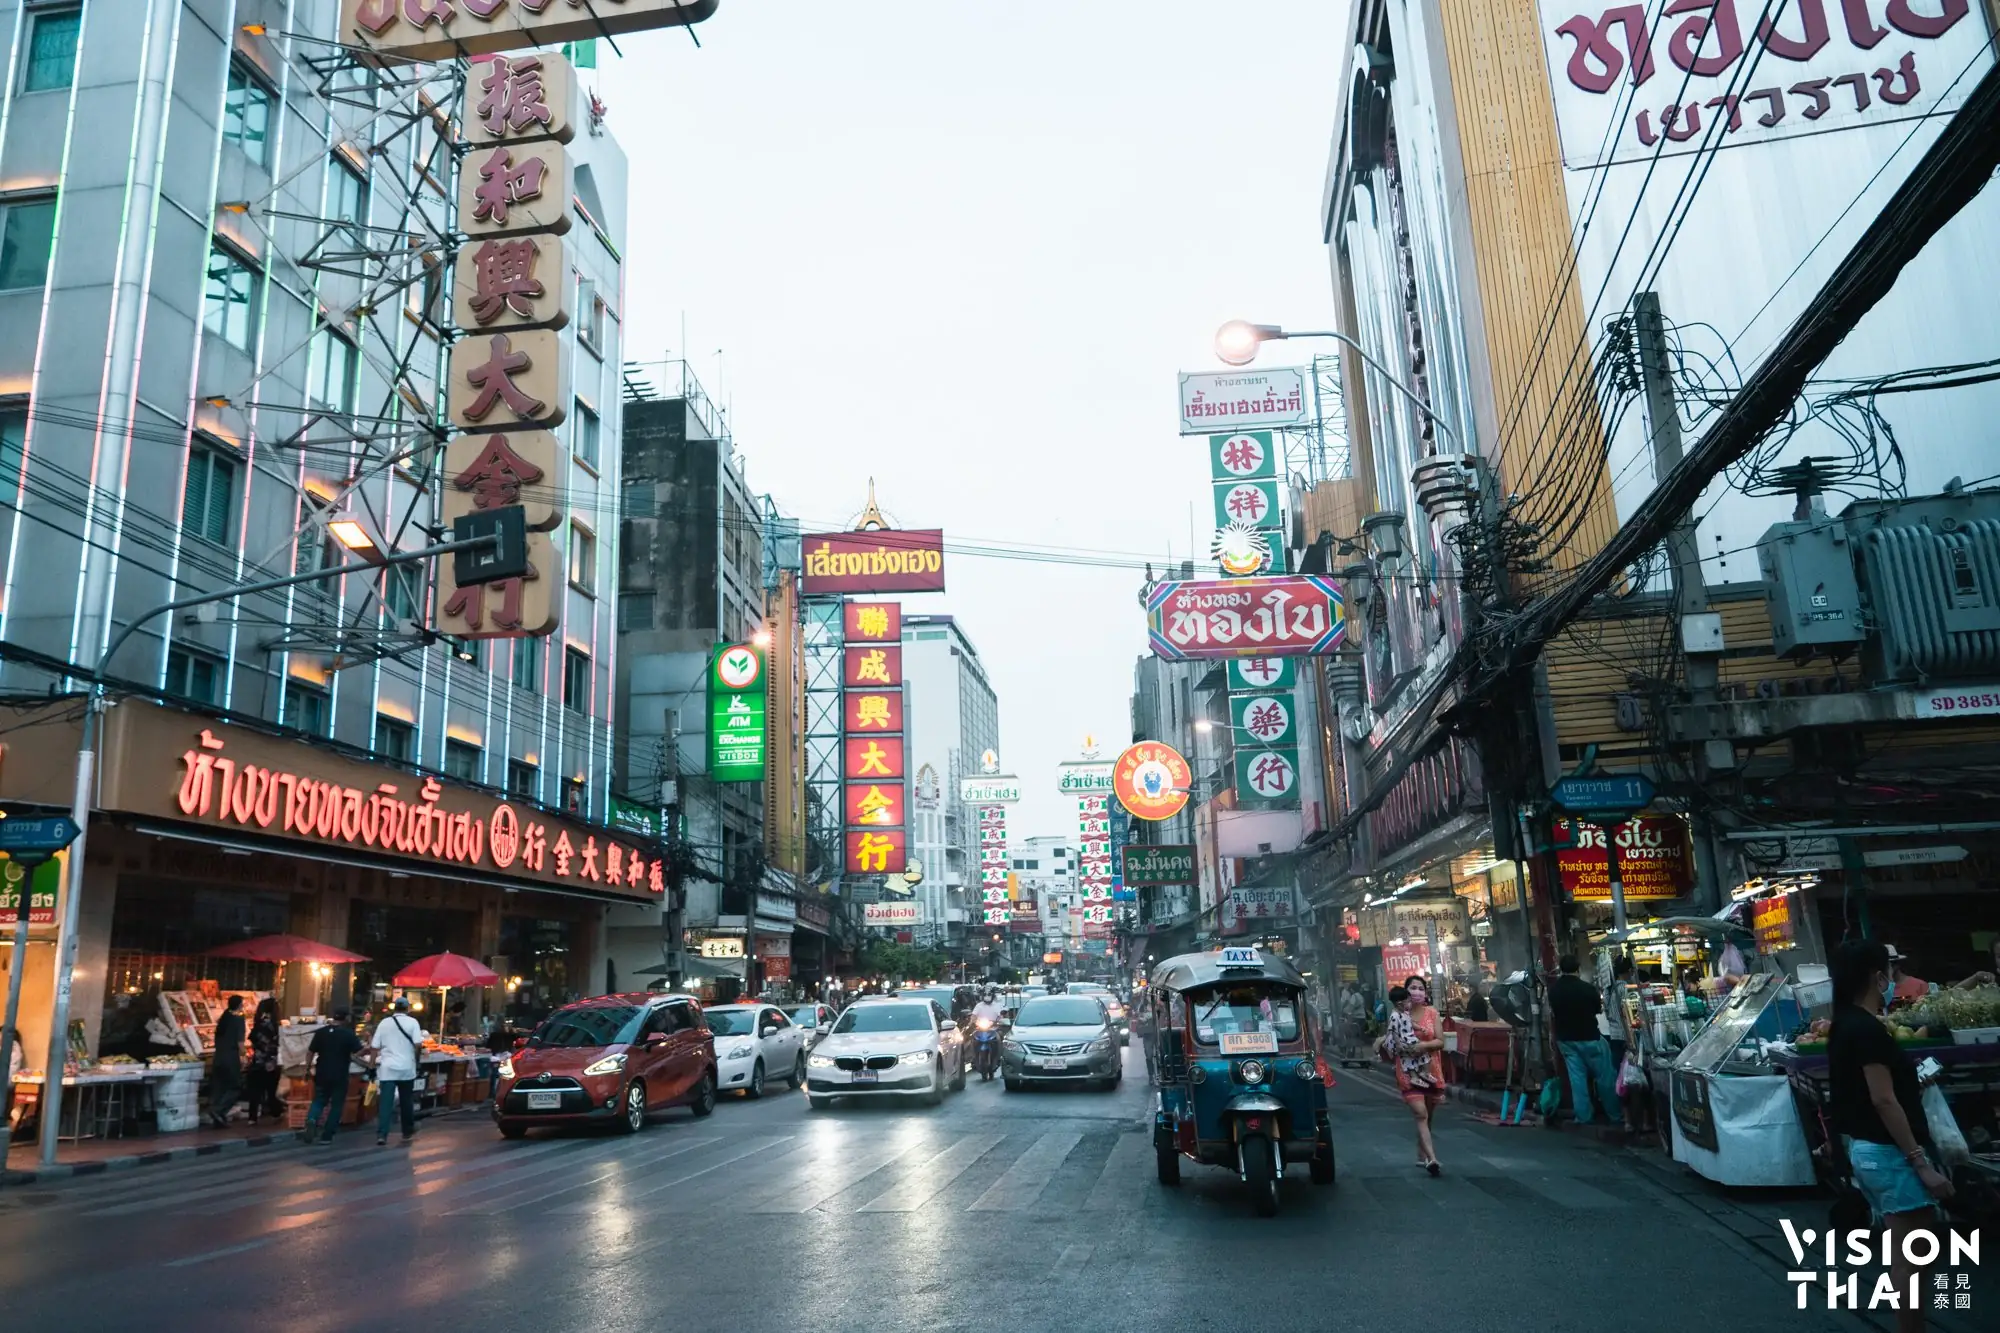 曼谷中國城是當地美食重鎮(VISION THAI)